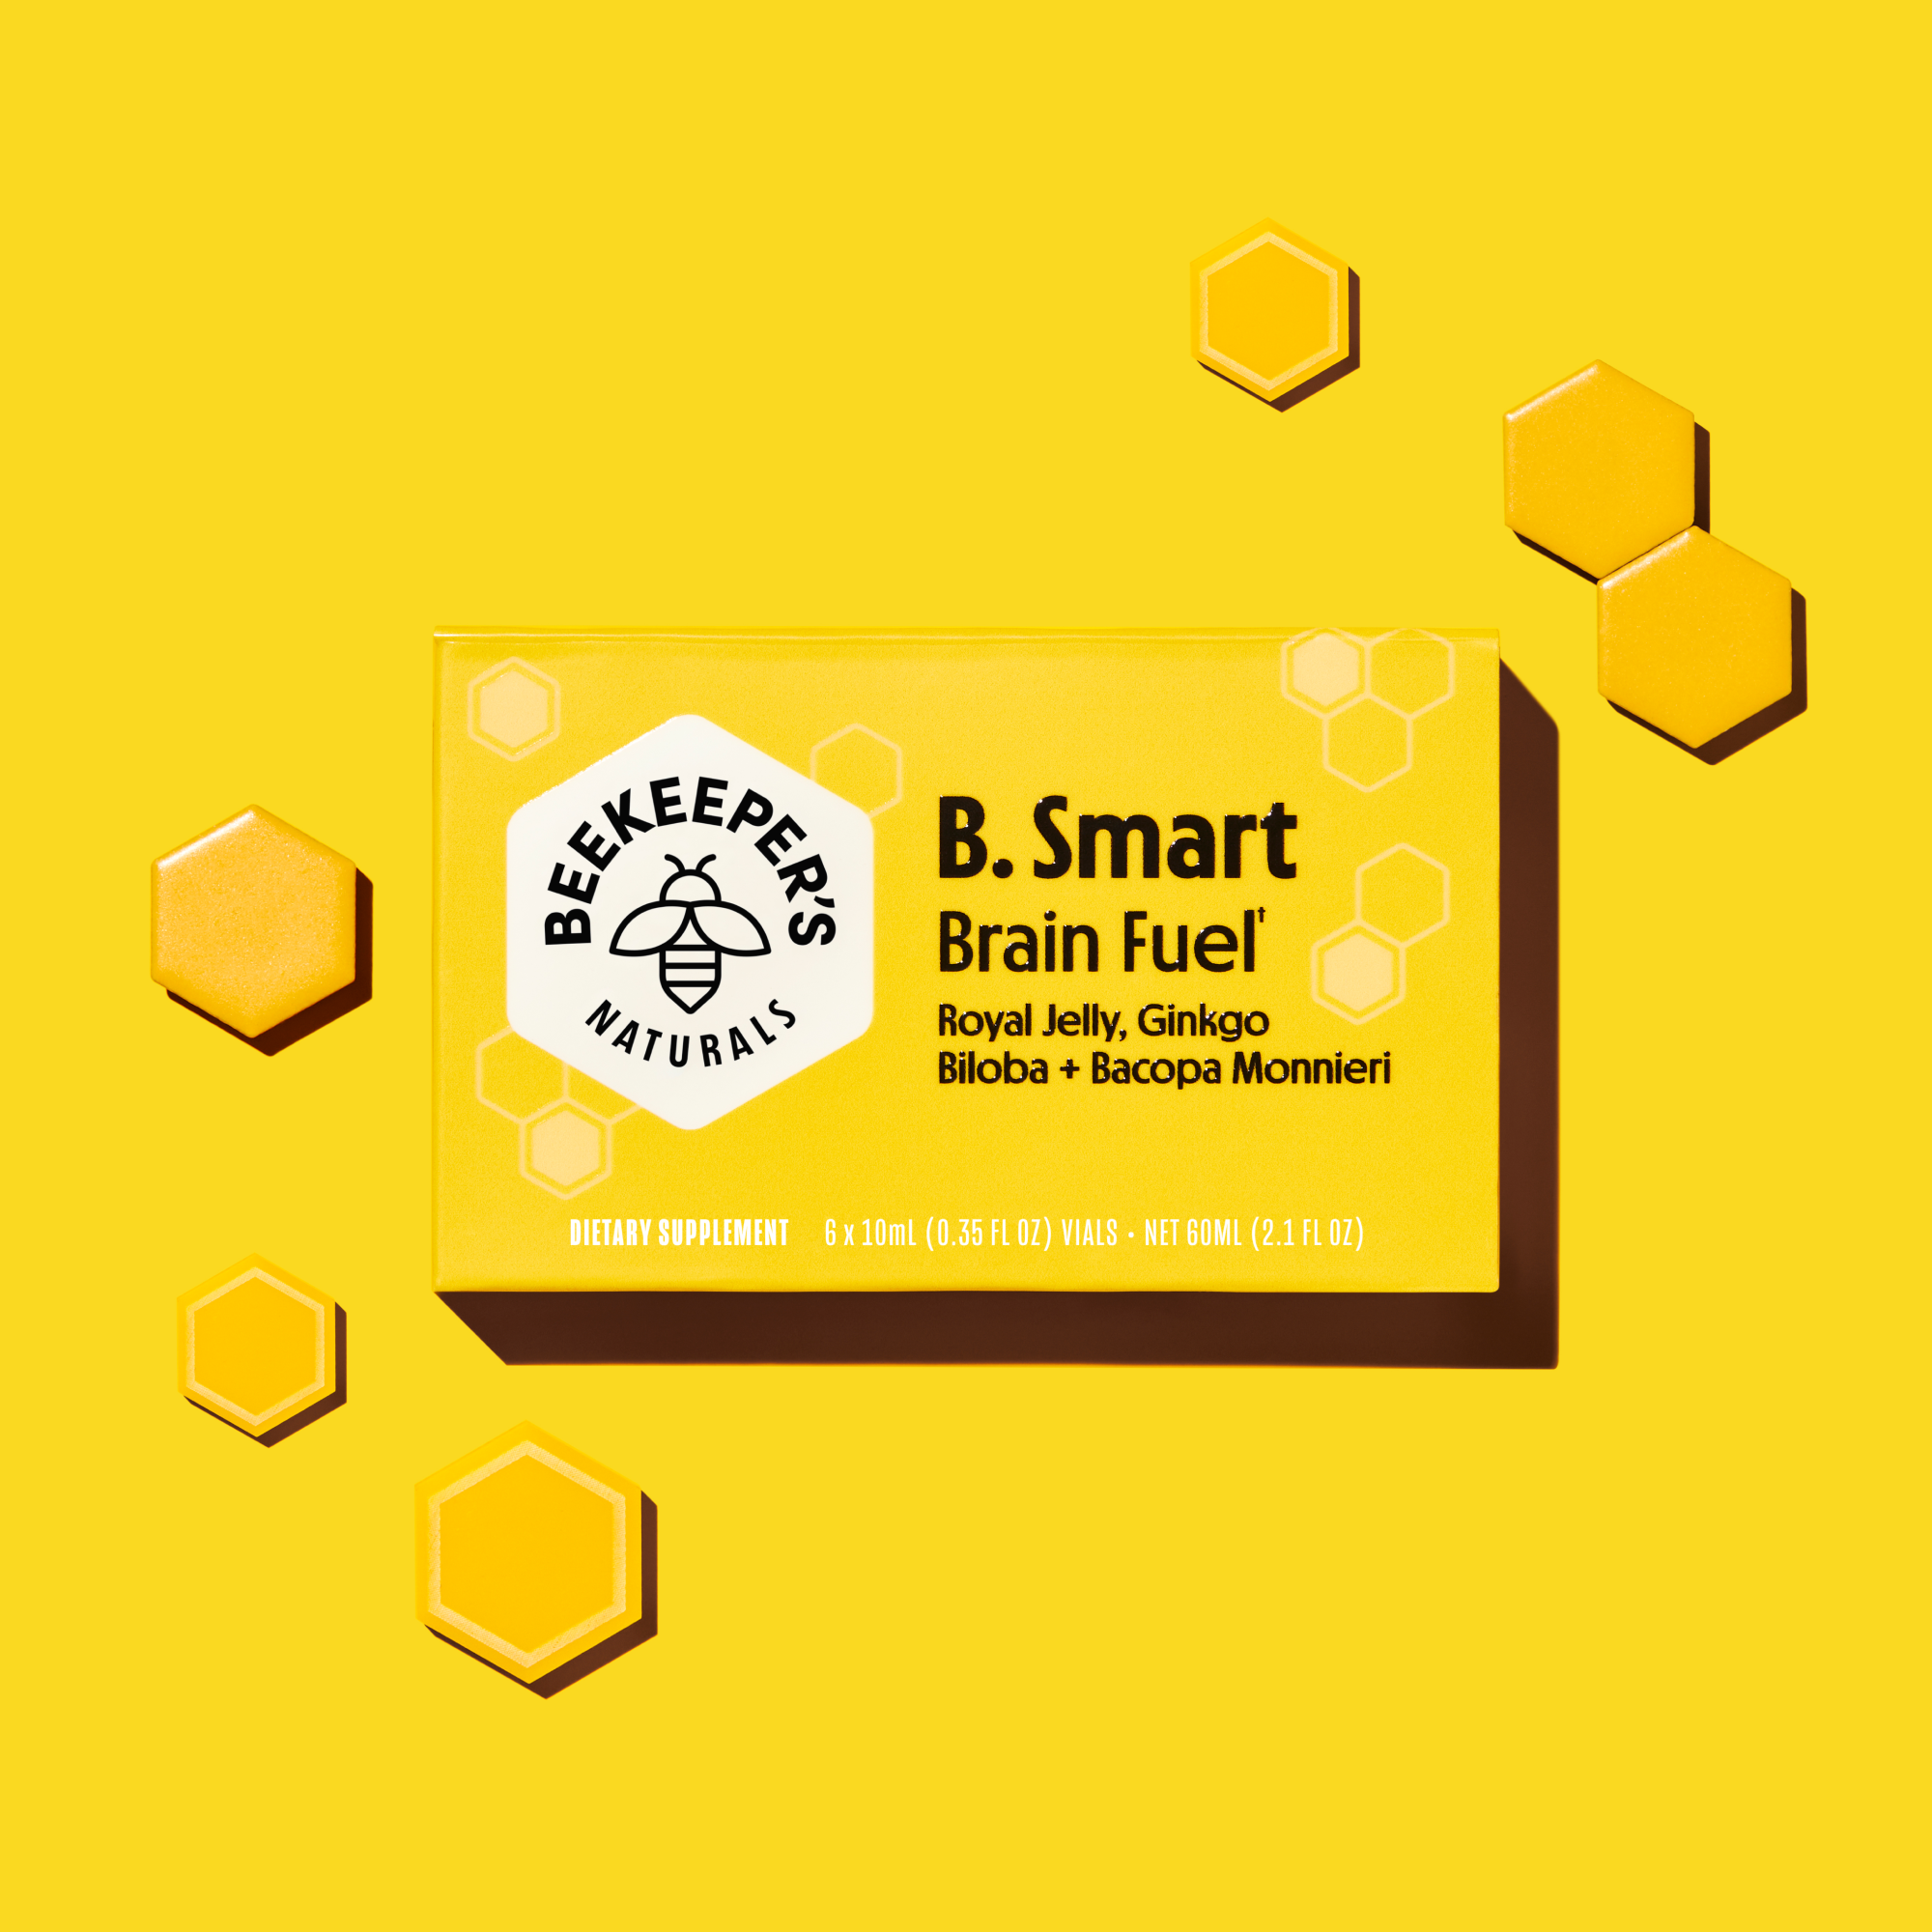 B.Smart Brain Fuel